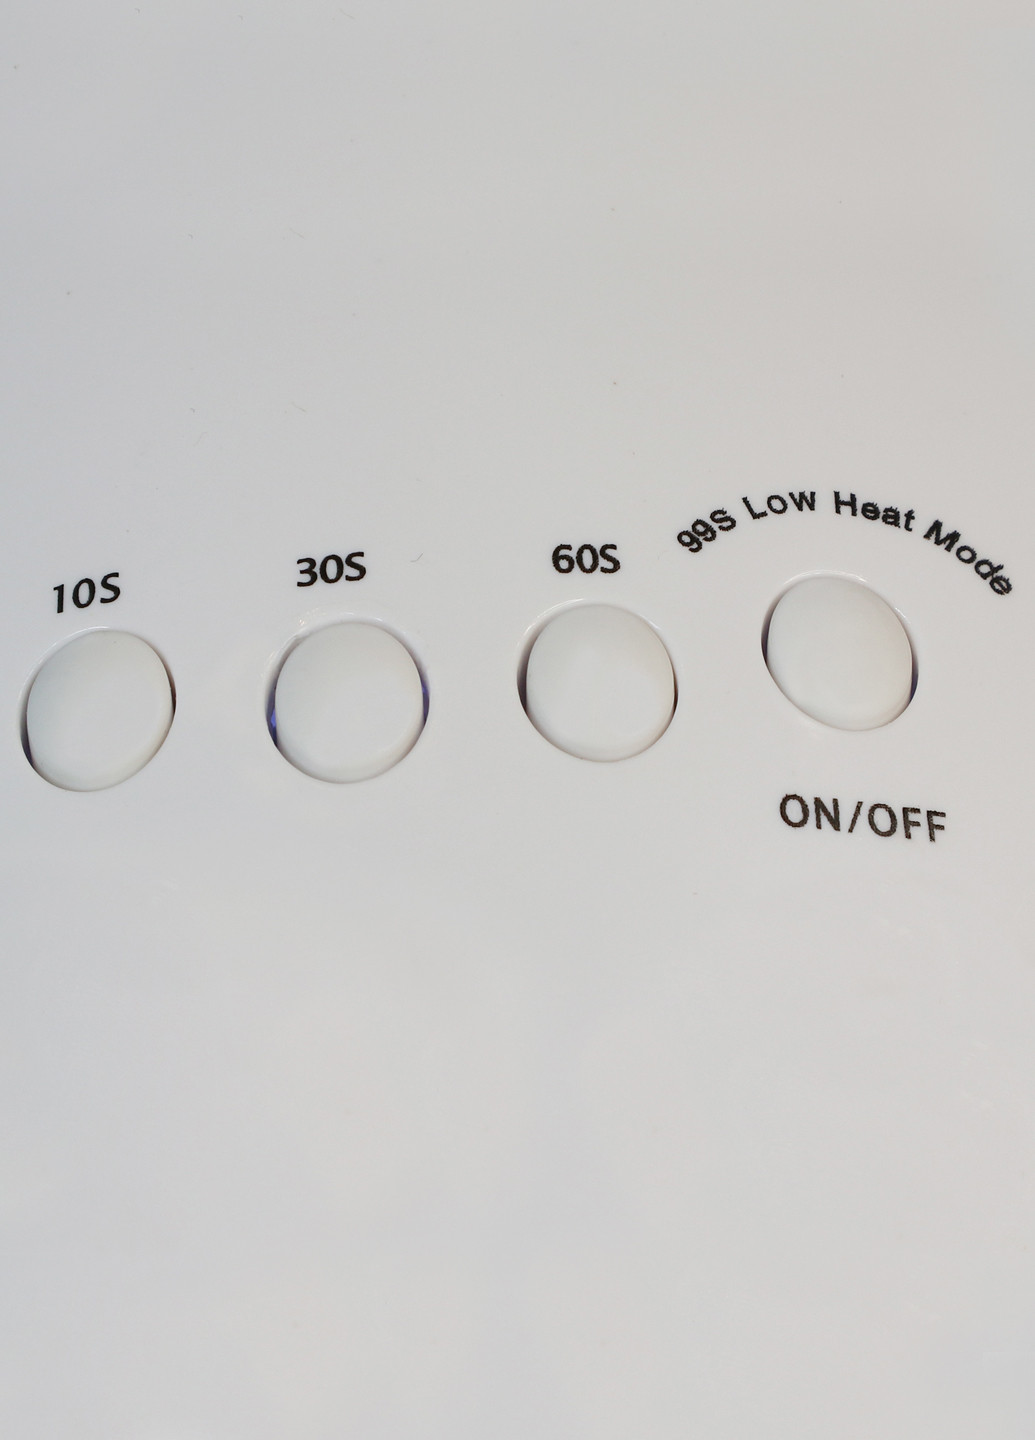 Лампа для маникюра SUN 5 для покрытия ногтей гель лаком, гелем UV/LED 48W White UFT (238644745)